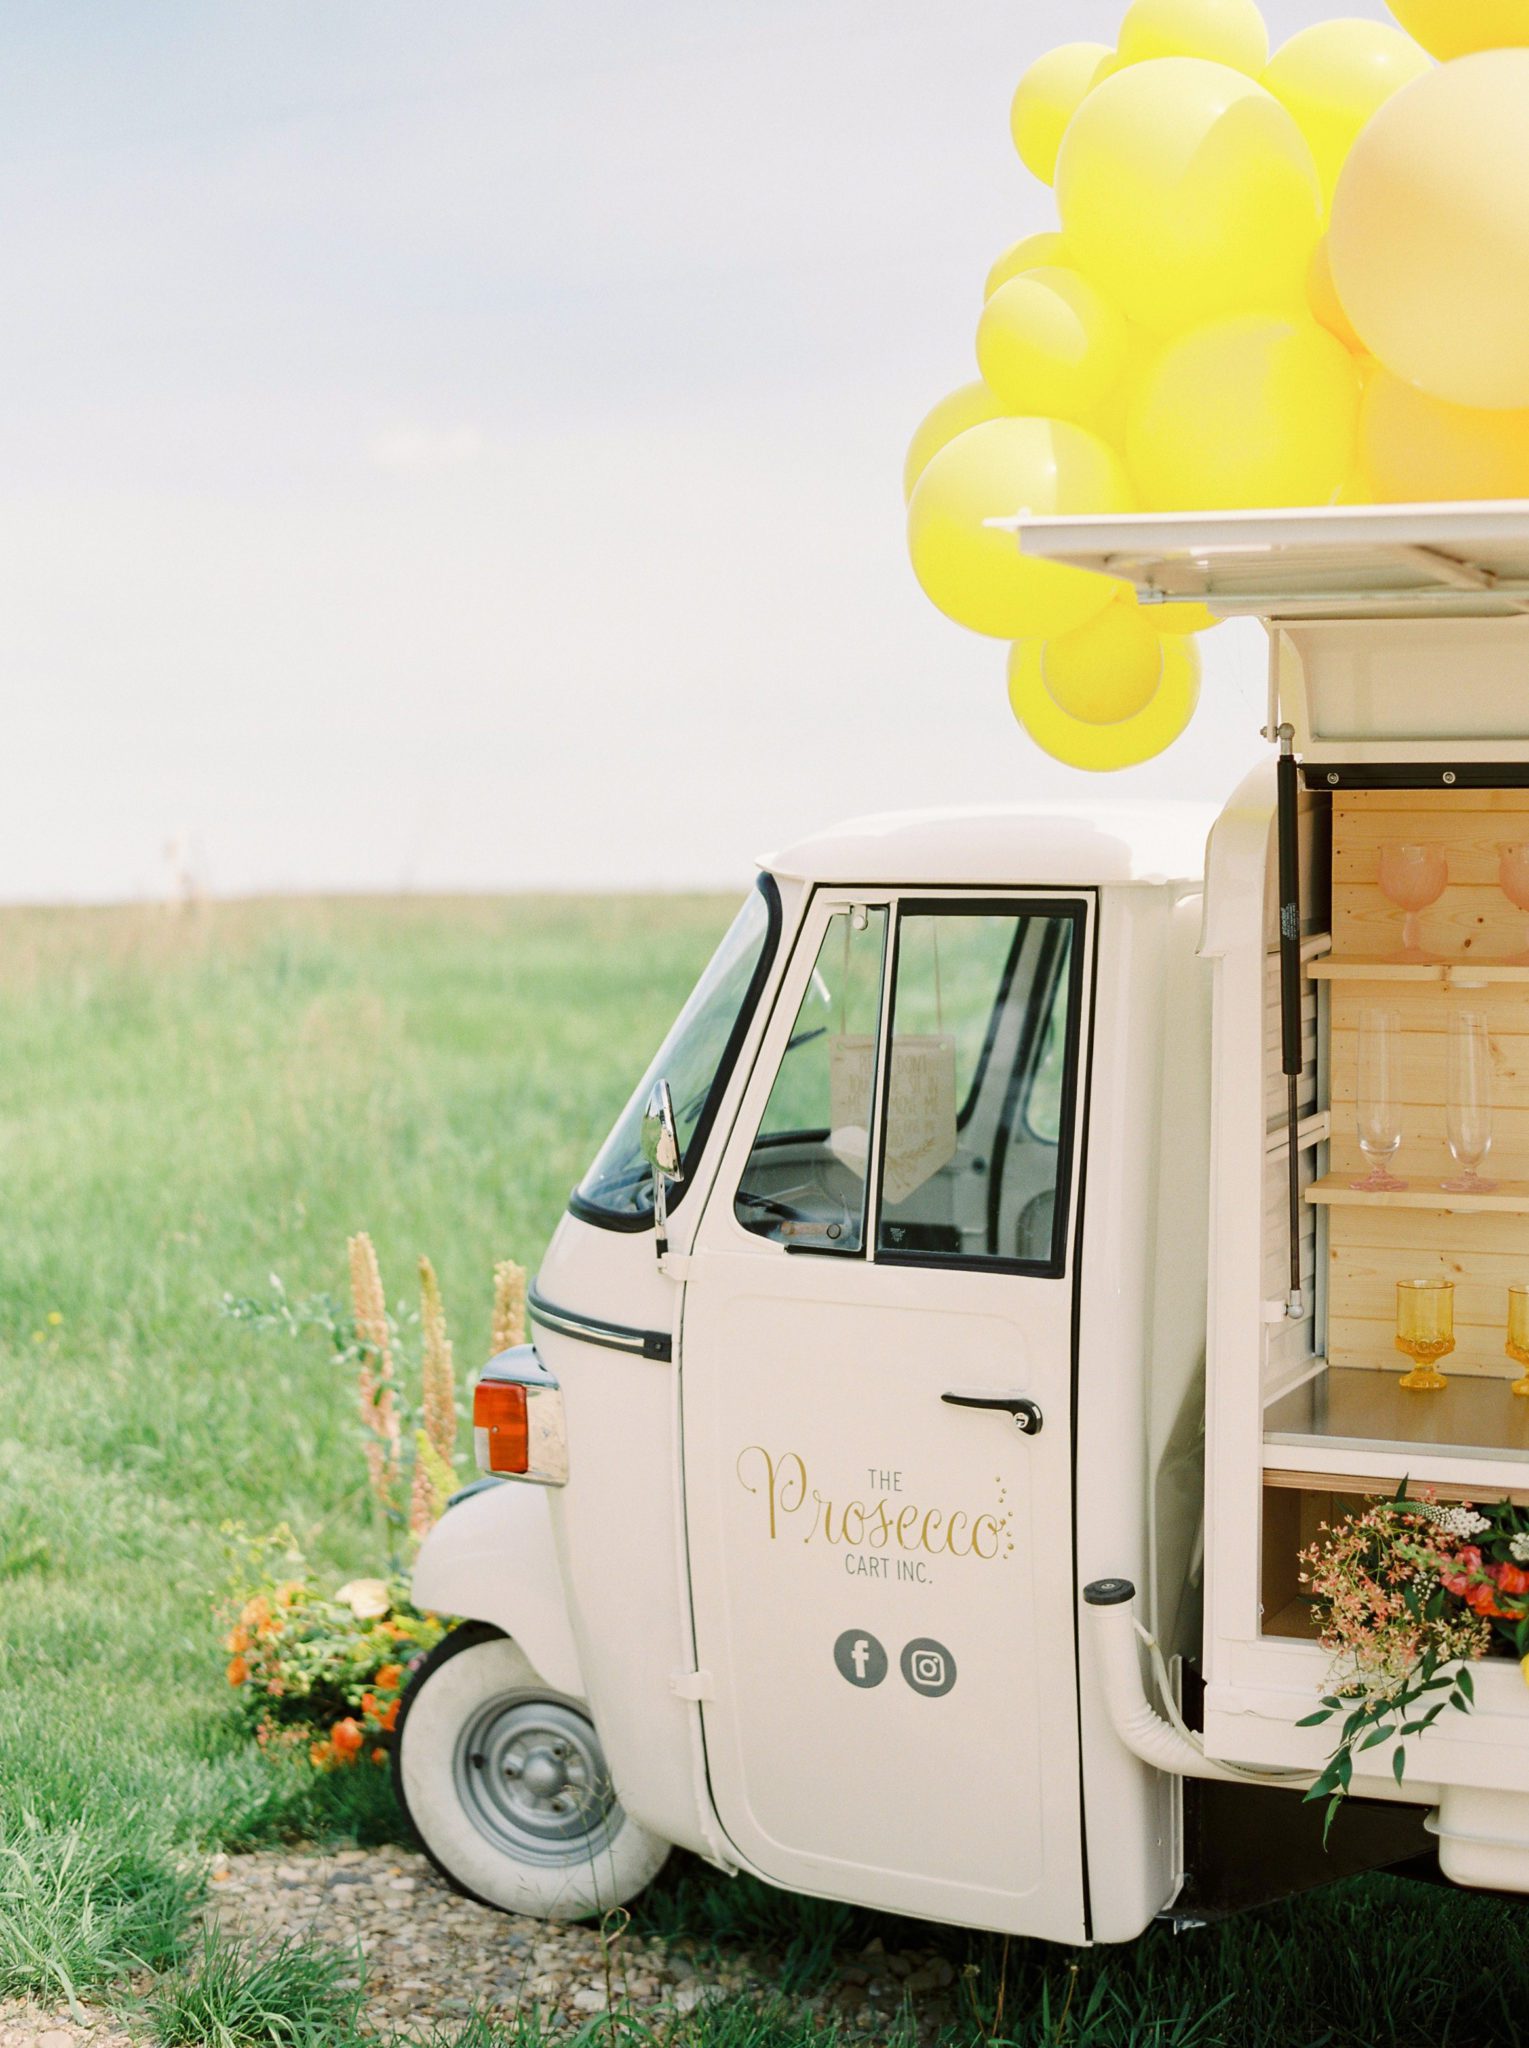 Farmhouse Chic: A Vibrant Wedding Inspiration Shoot at the Gathered | Brontë Bride Blog